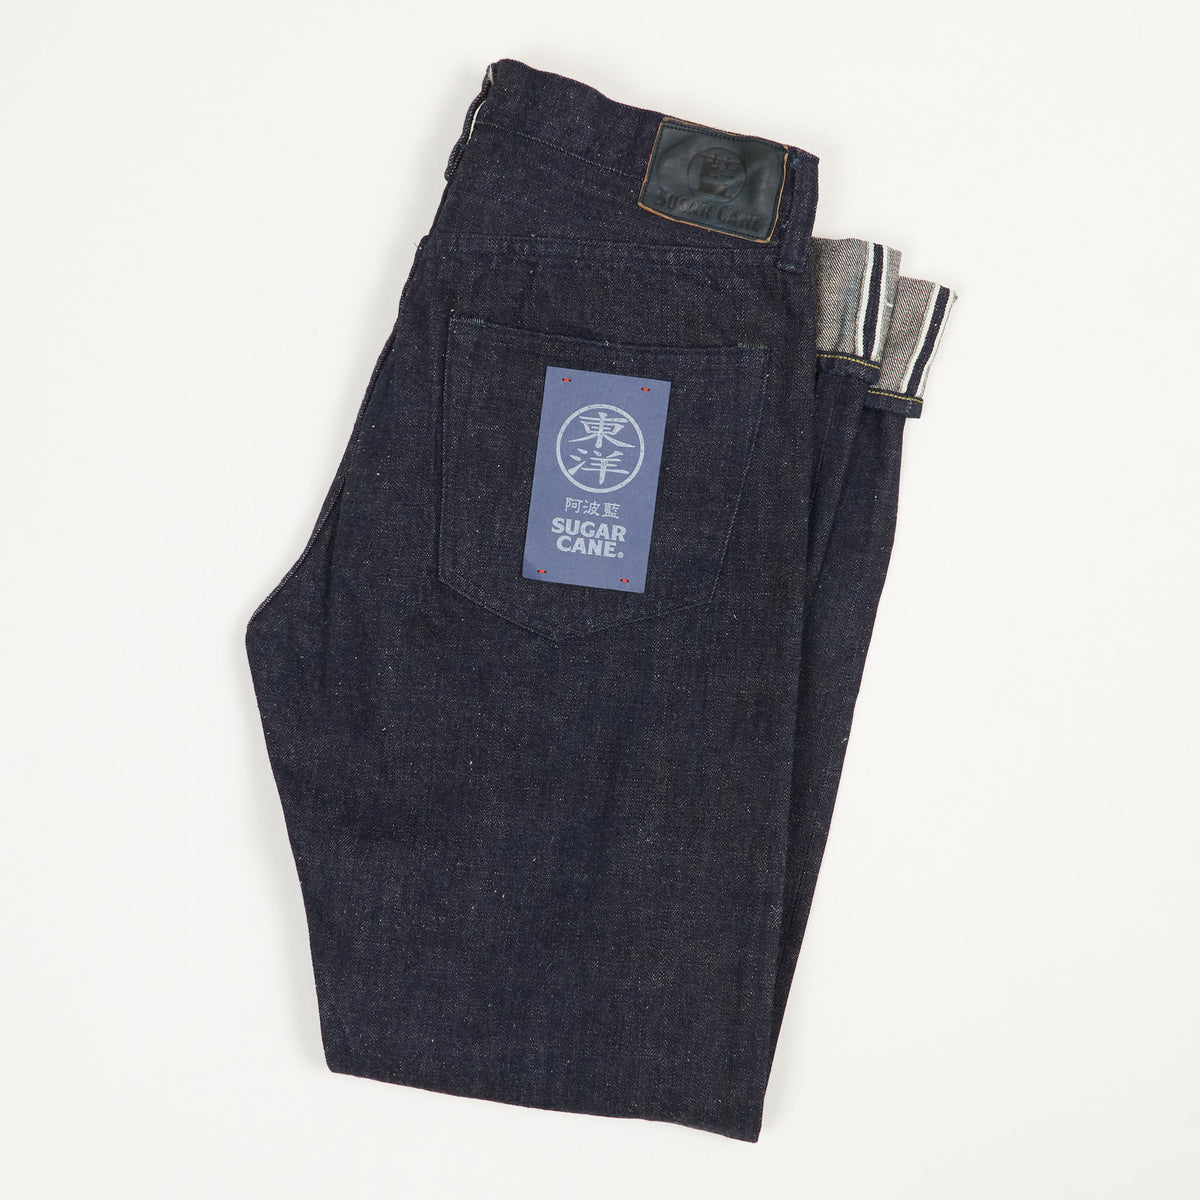 Sugar Cane Edo-Ai Authentic Indigo Limited Edition 5 Pocket Jeans